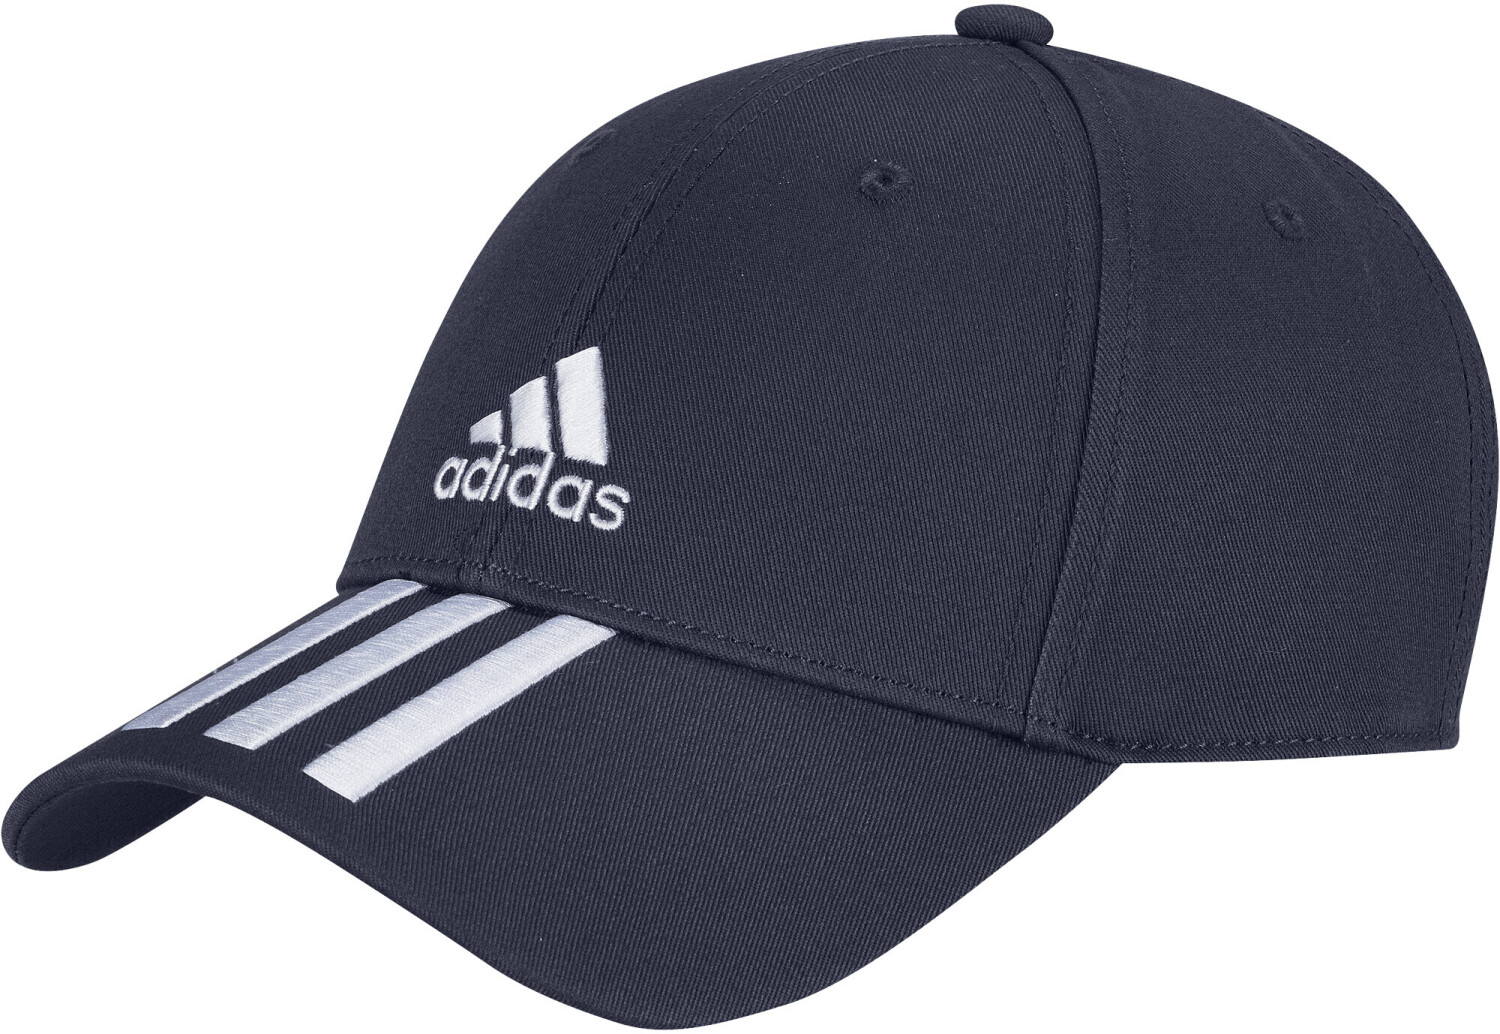 10,99 Preisvergleich ab Twill 3-Stripes | S/M Adidas Baseball Cap bei €